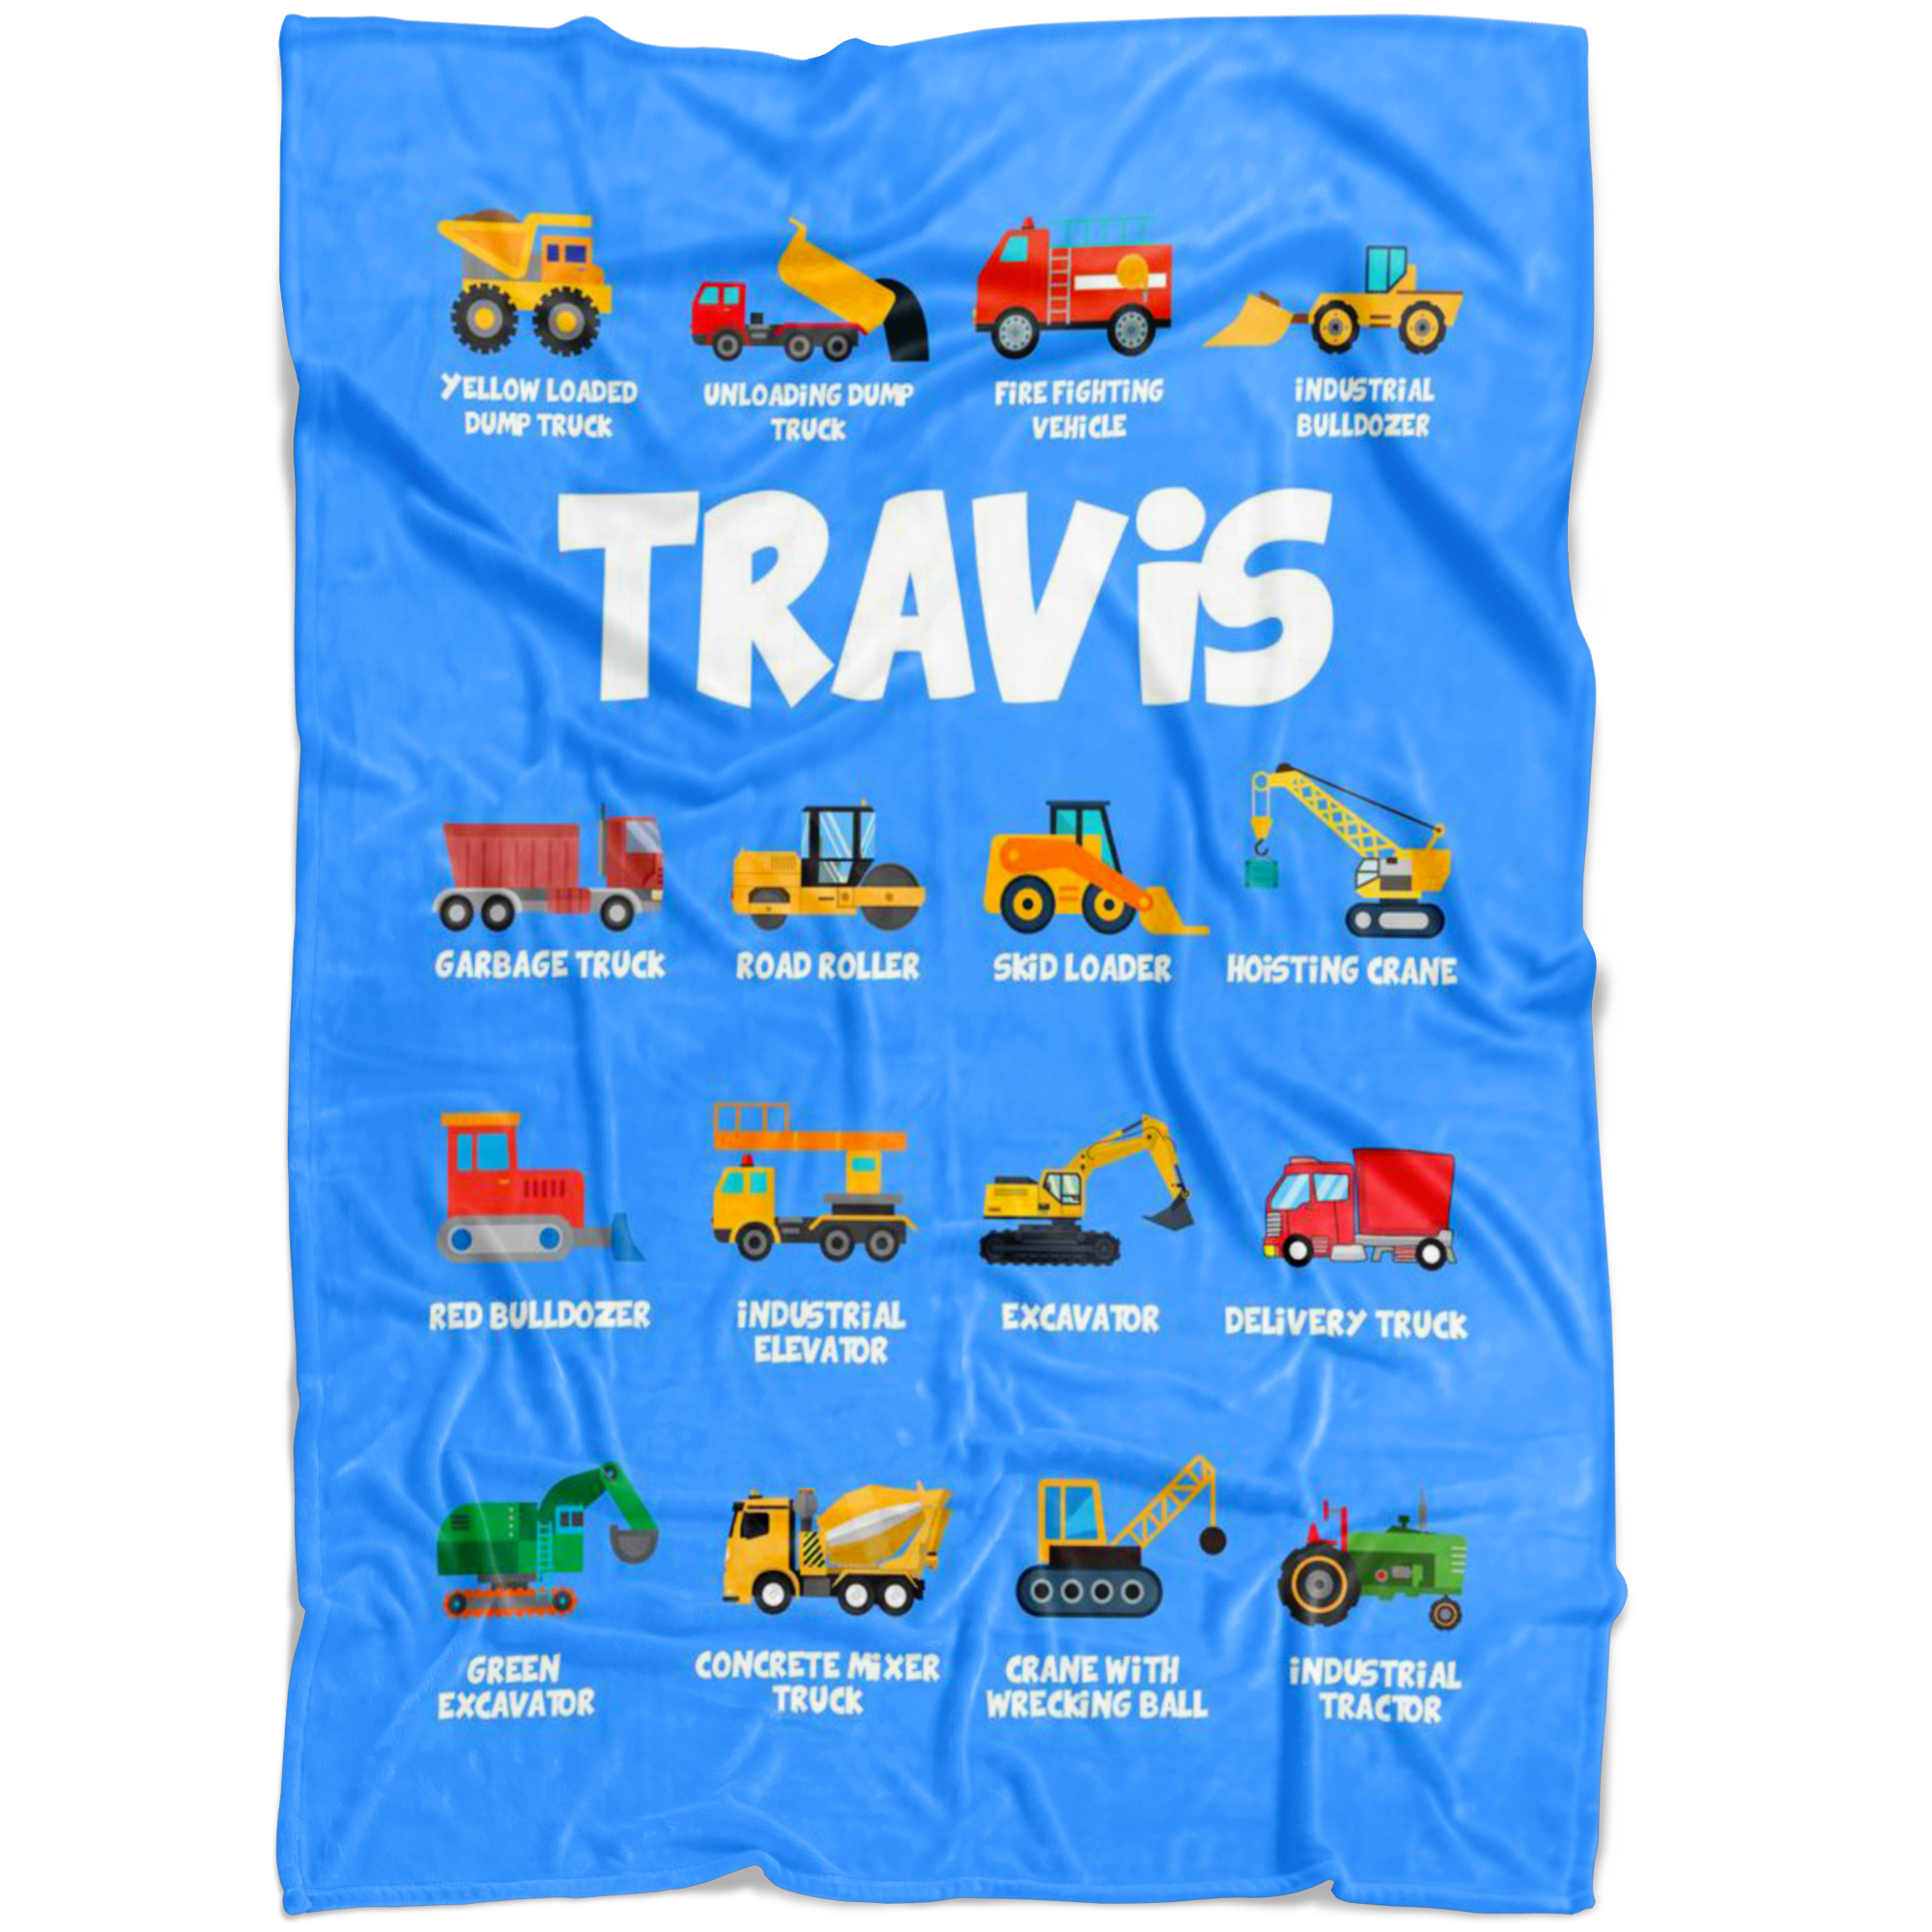 Travis Construction Blanket Blue